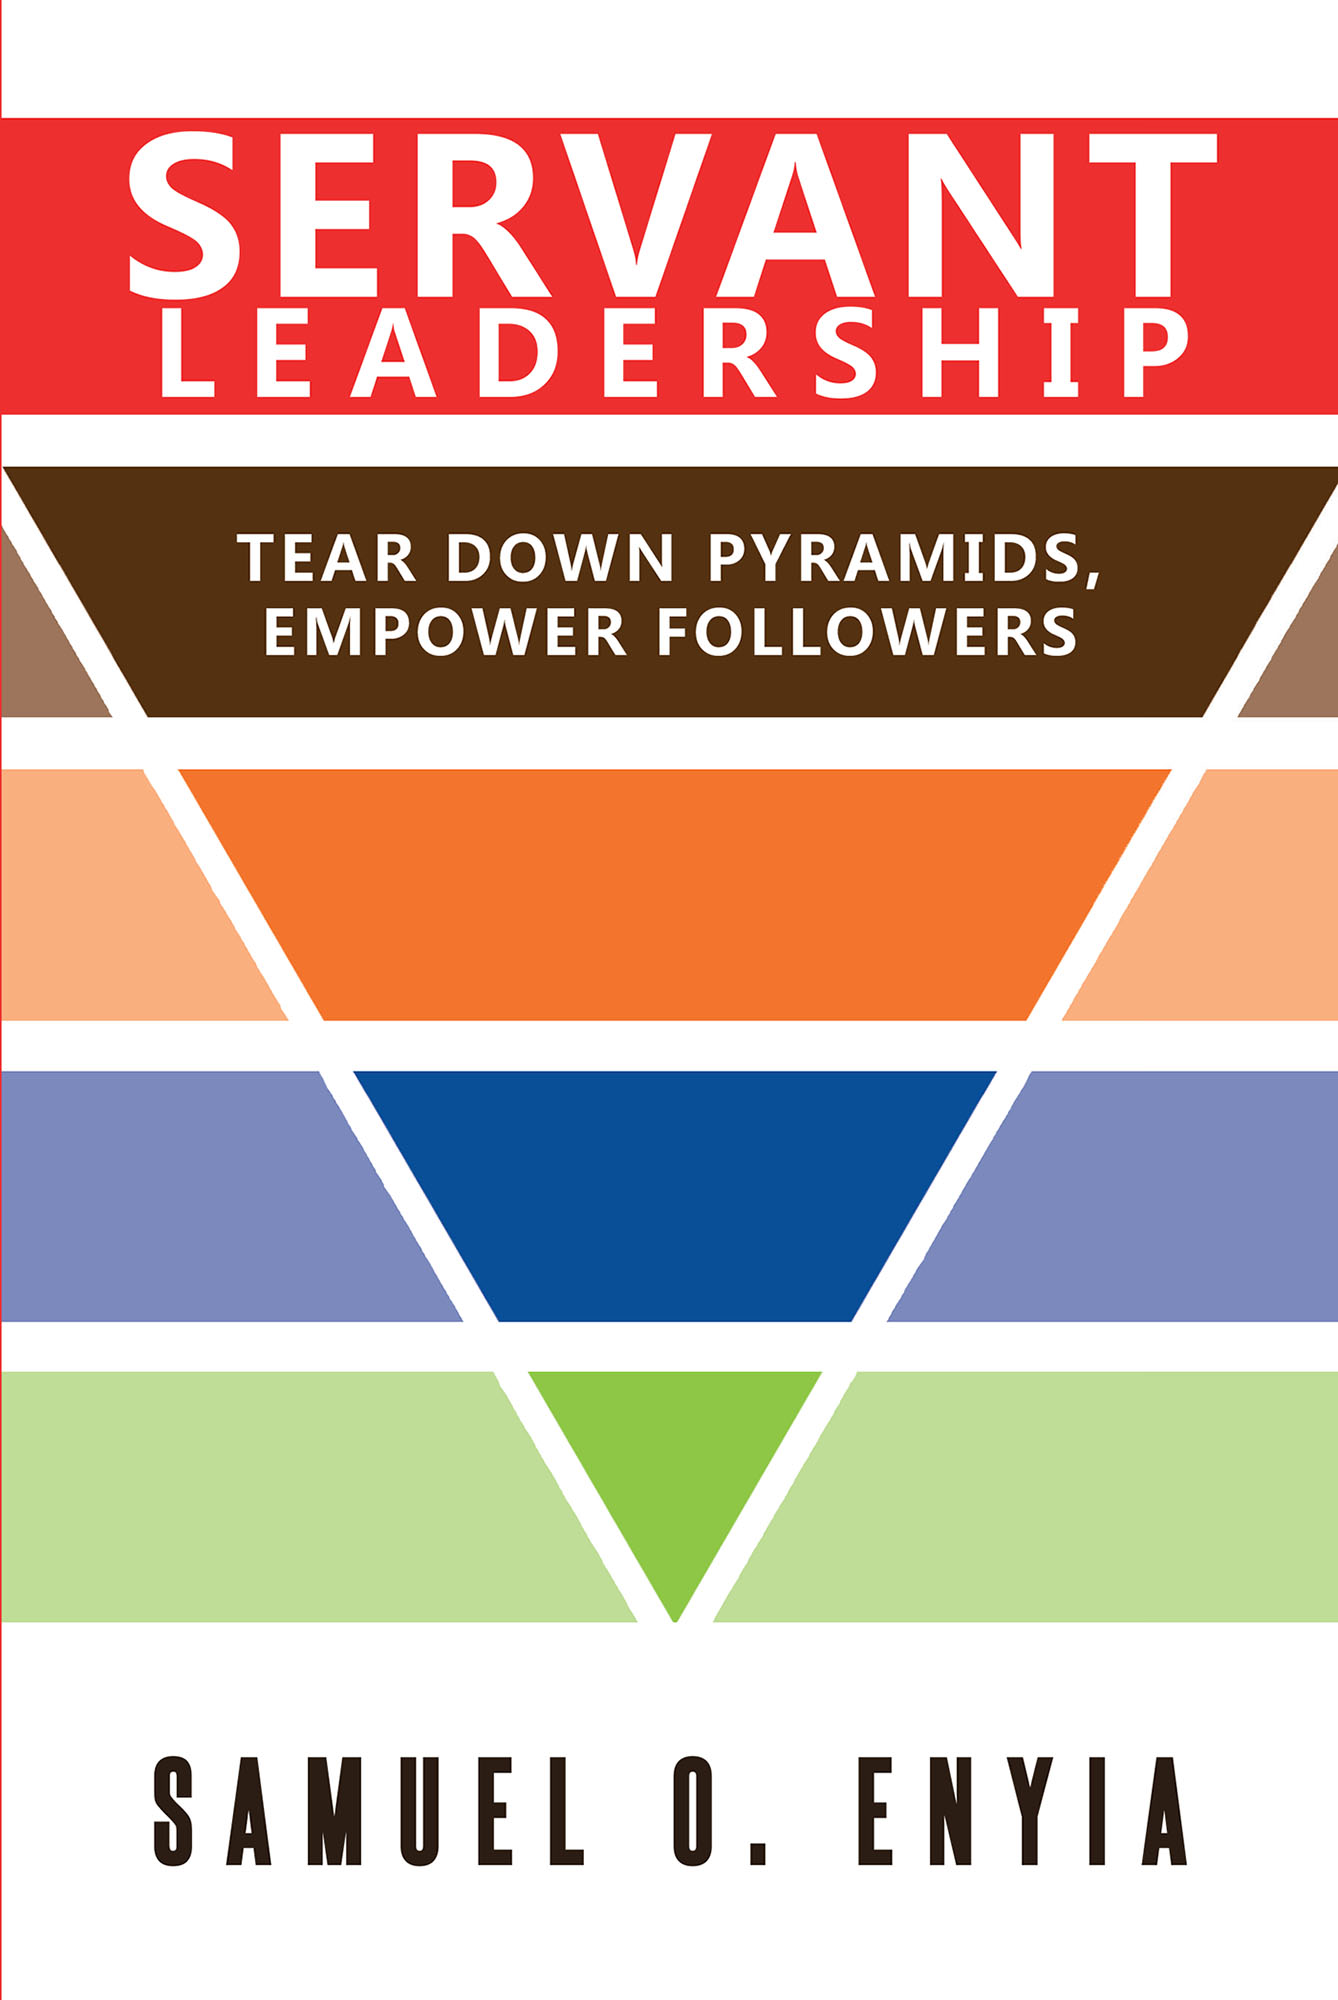 Servant Leadership Cover Image